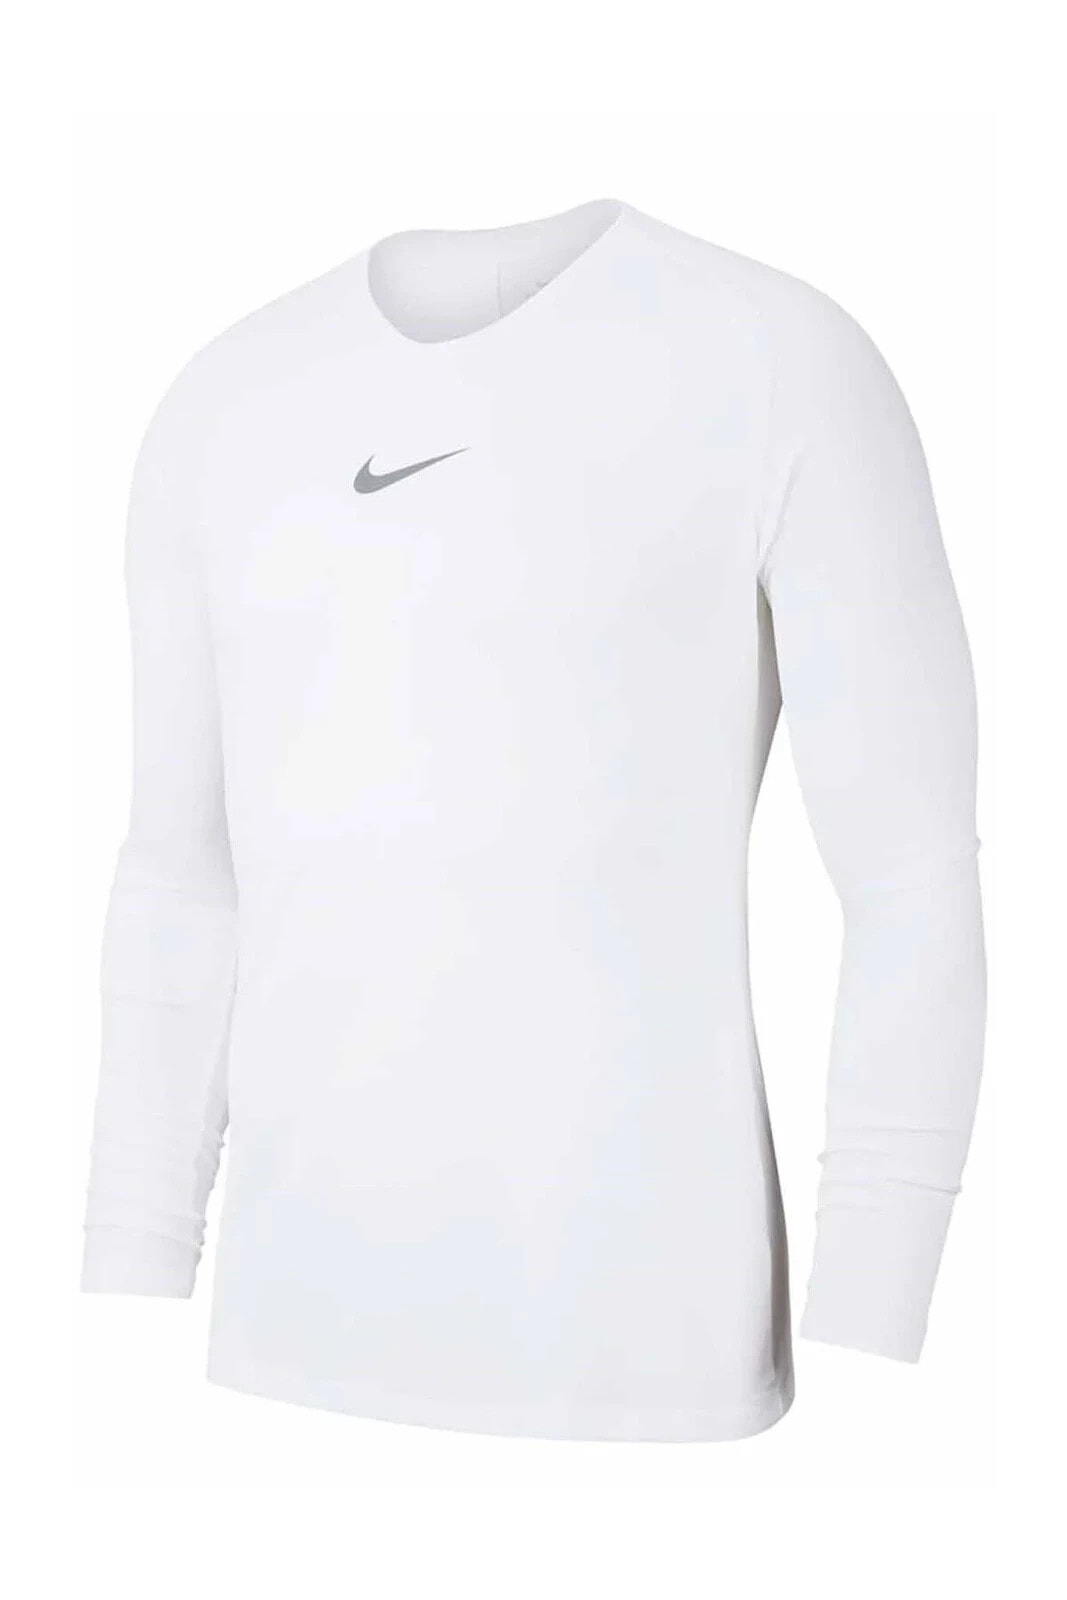 Erkek Beyaz T-shirt Av2609-100 N-100